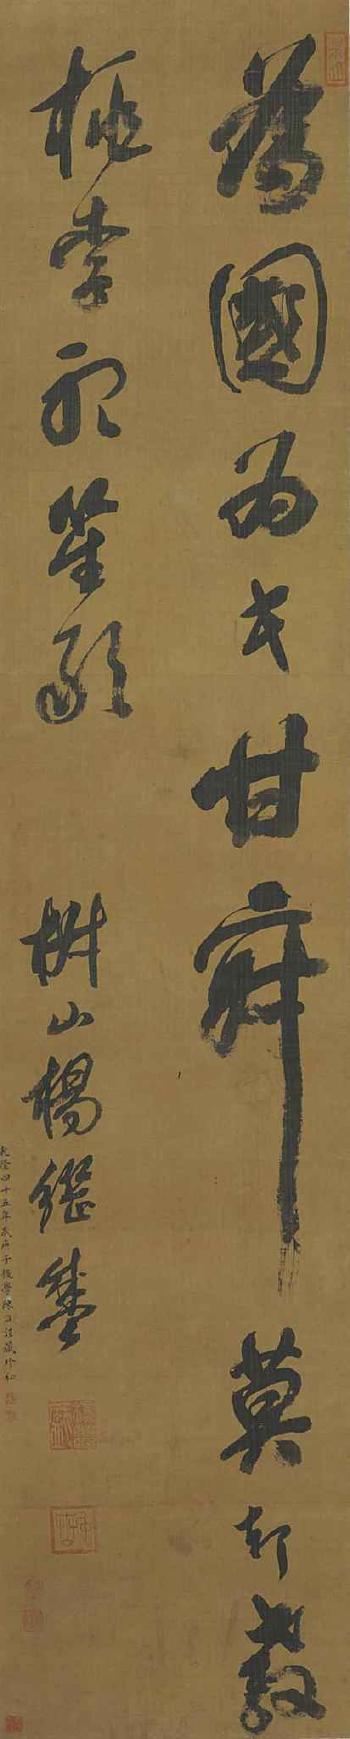 Calligraphy in running Script by 
																	 Yang Jisheng